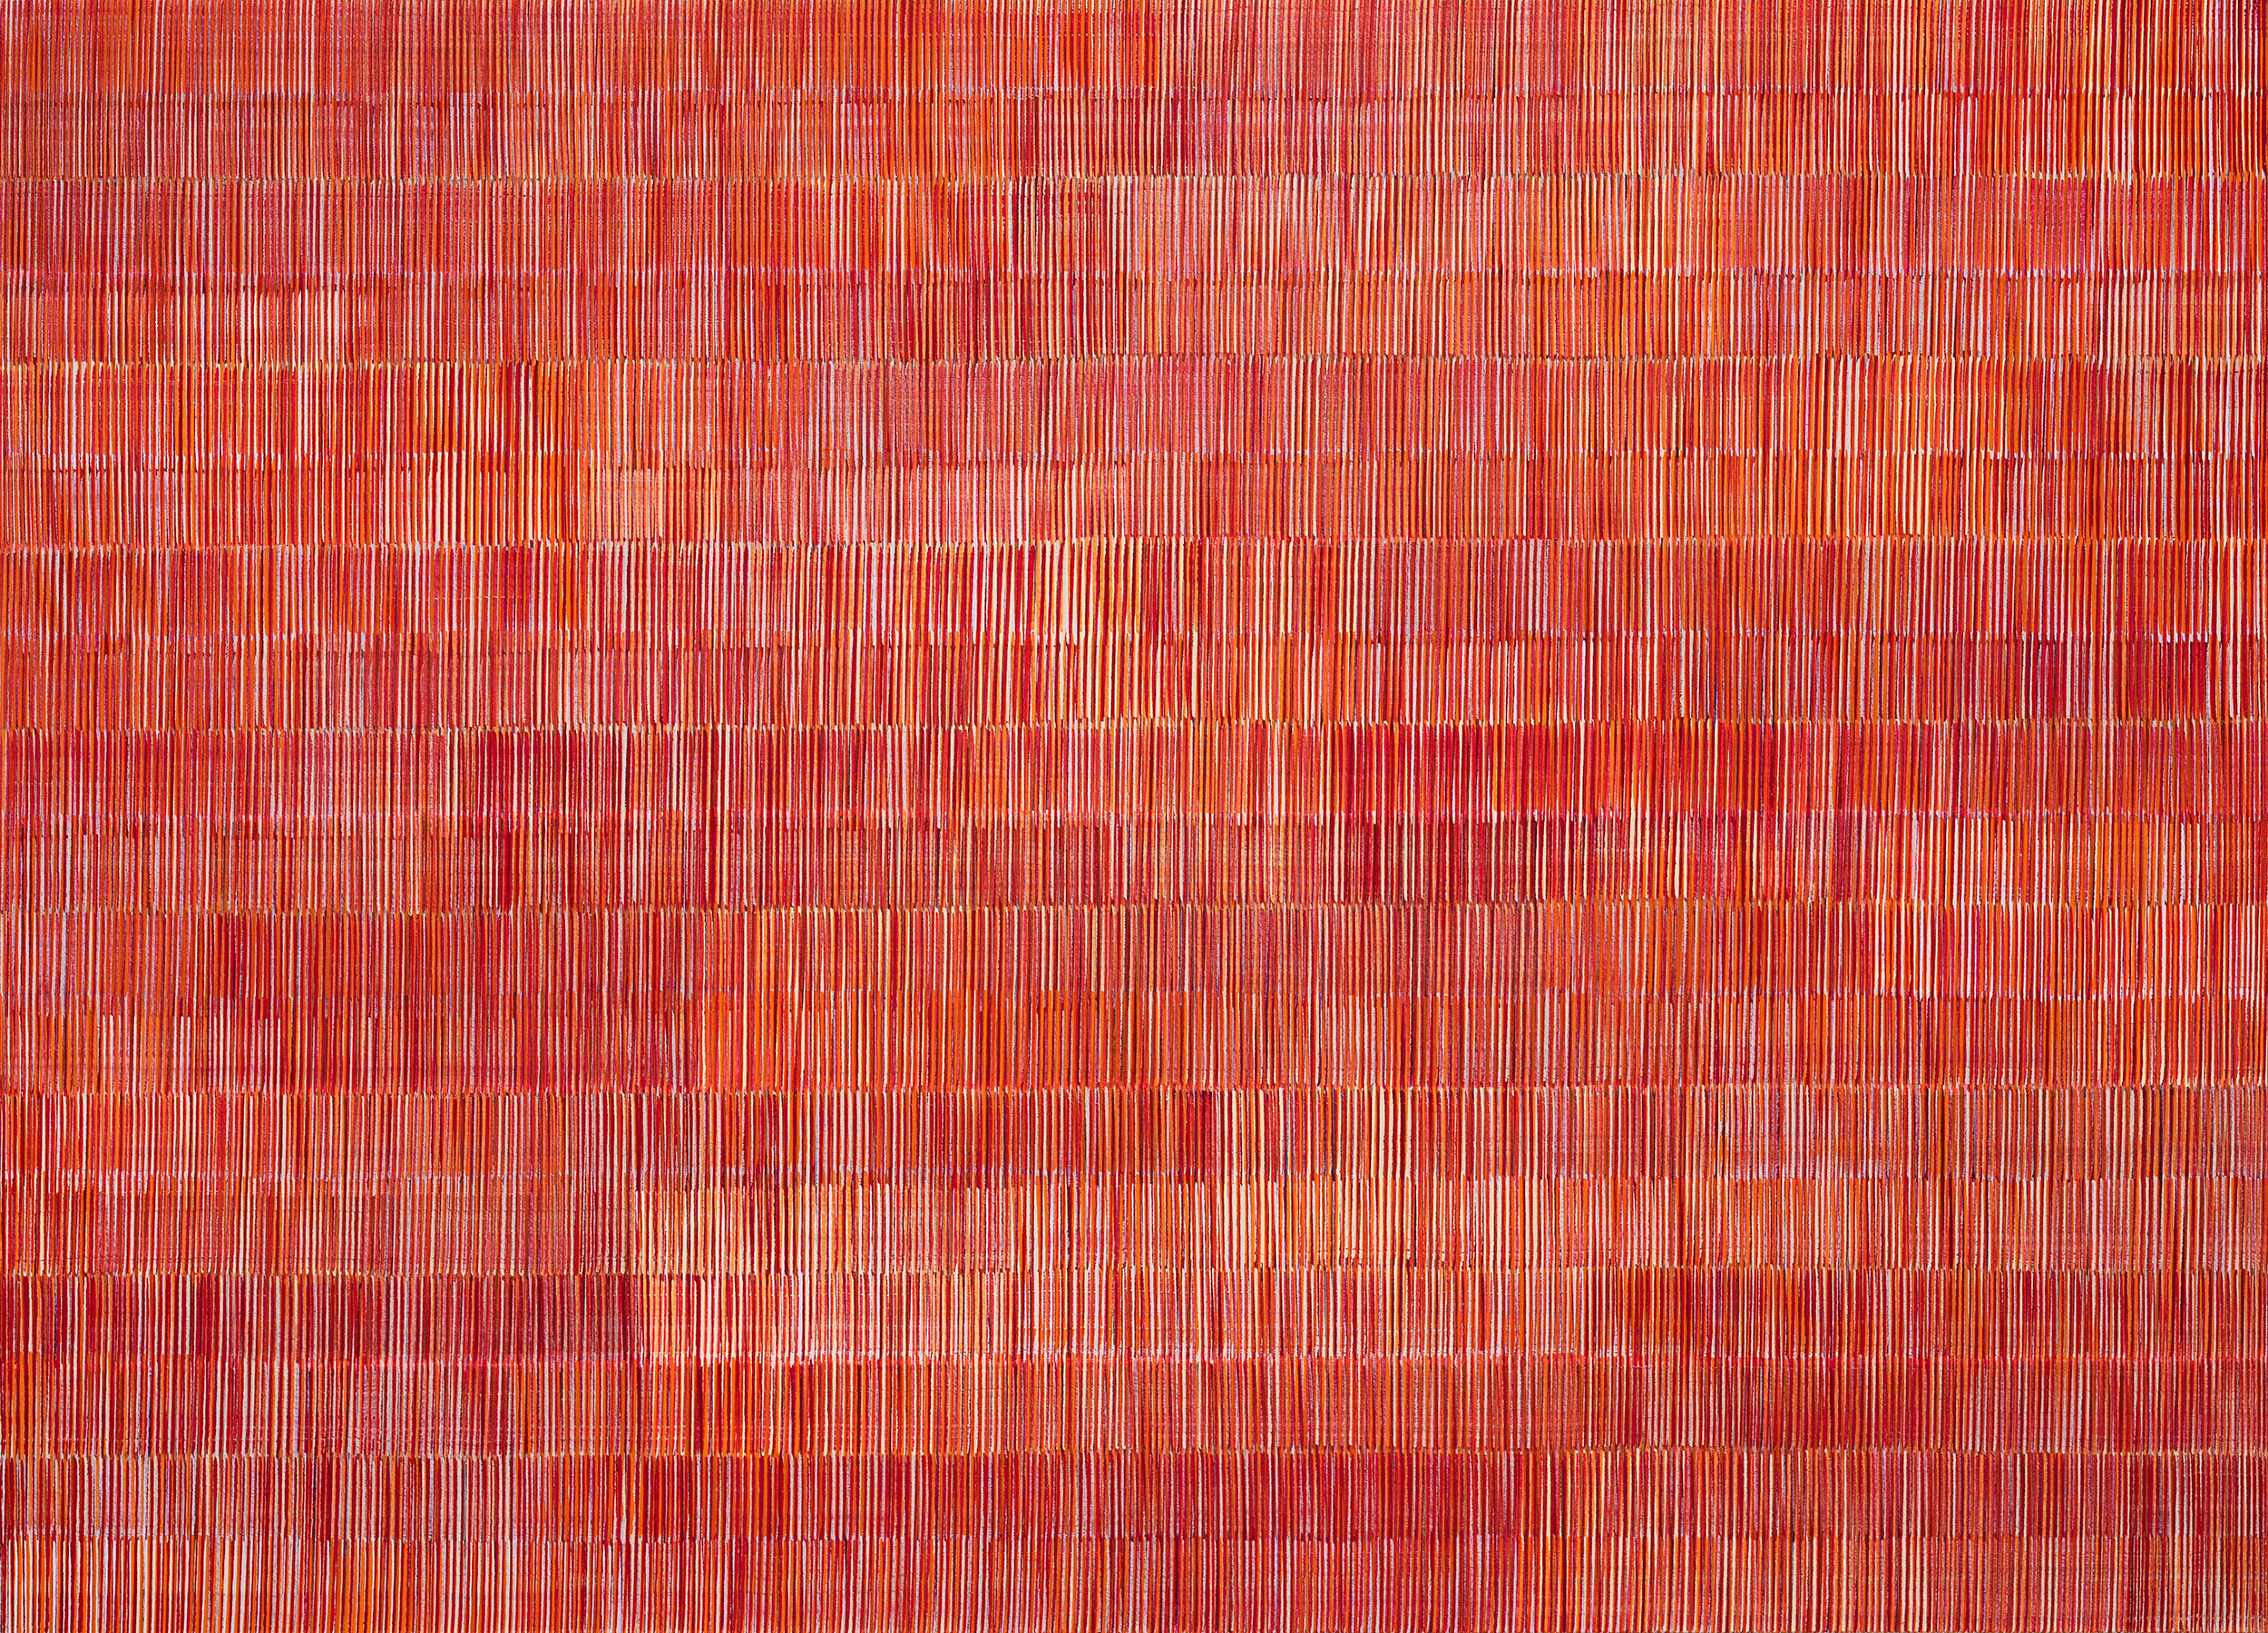 Nikola Dimitrov, KlangKomposition I, 2020, Pigmente, Bindemittel auf Leinwand, 180 x 250 cm